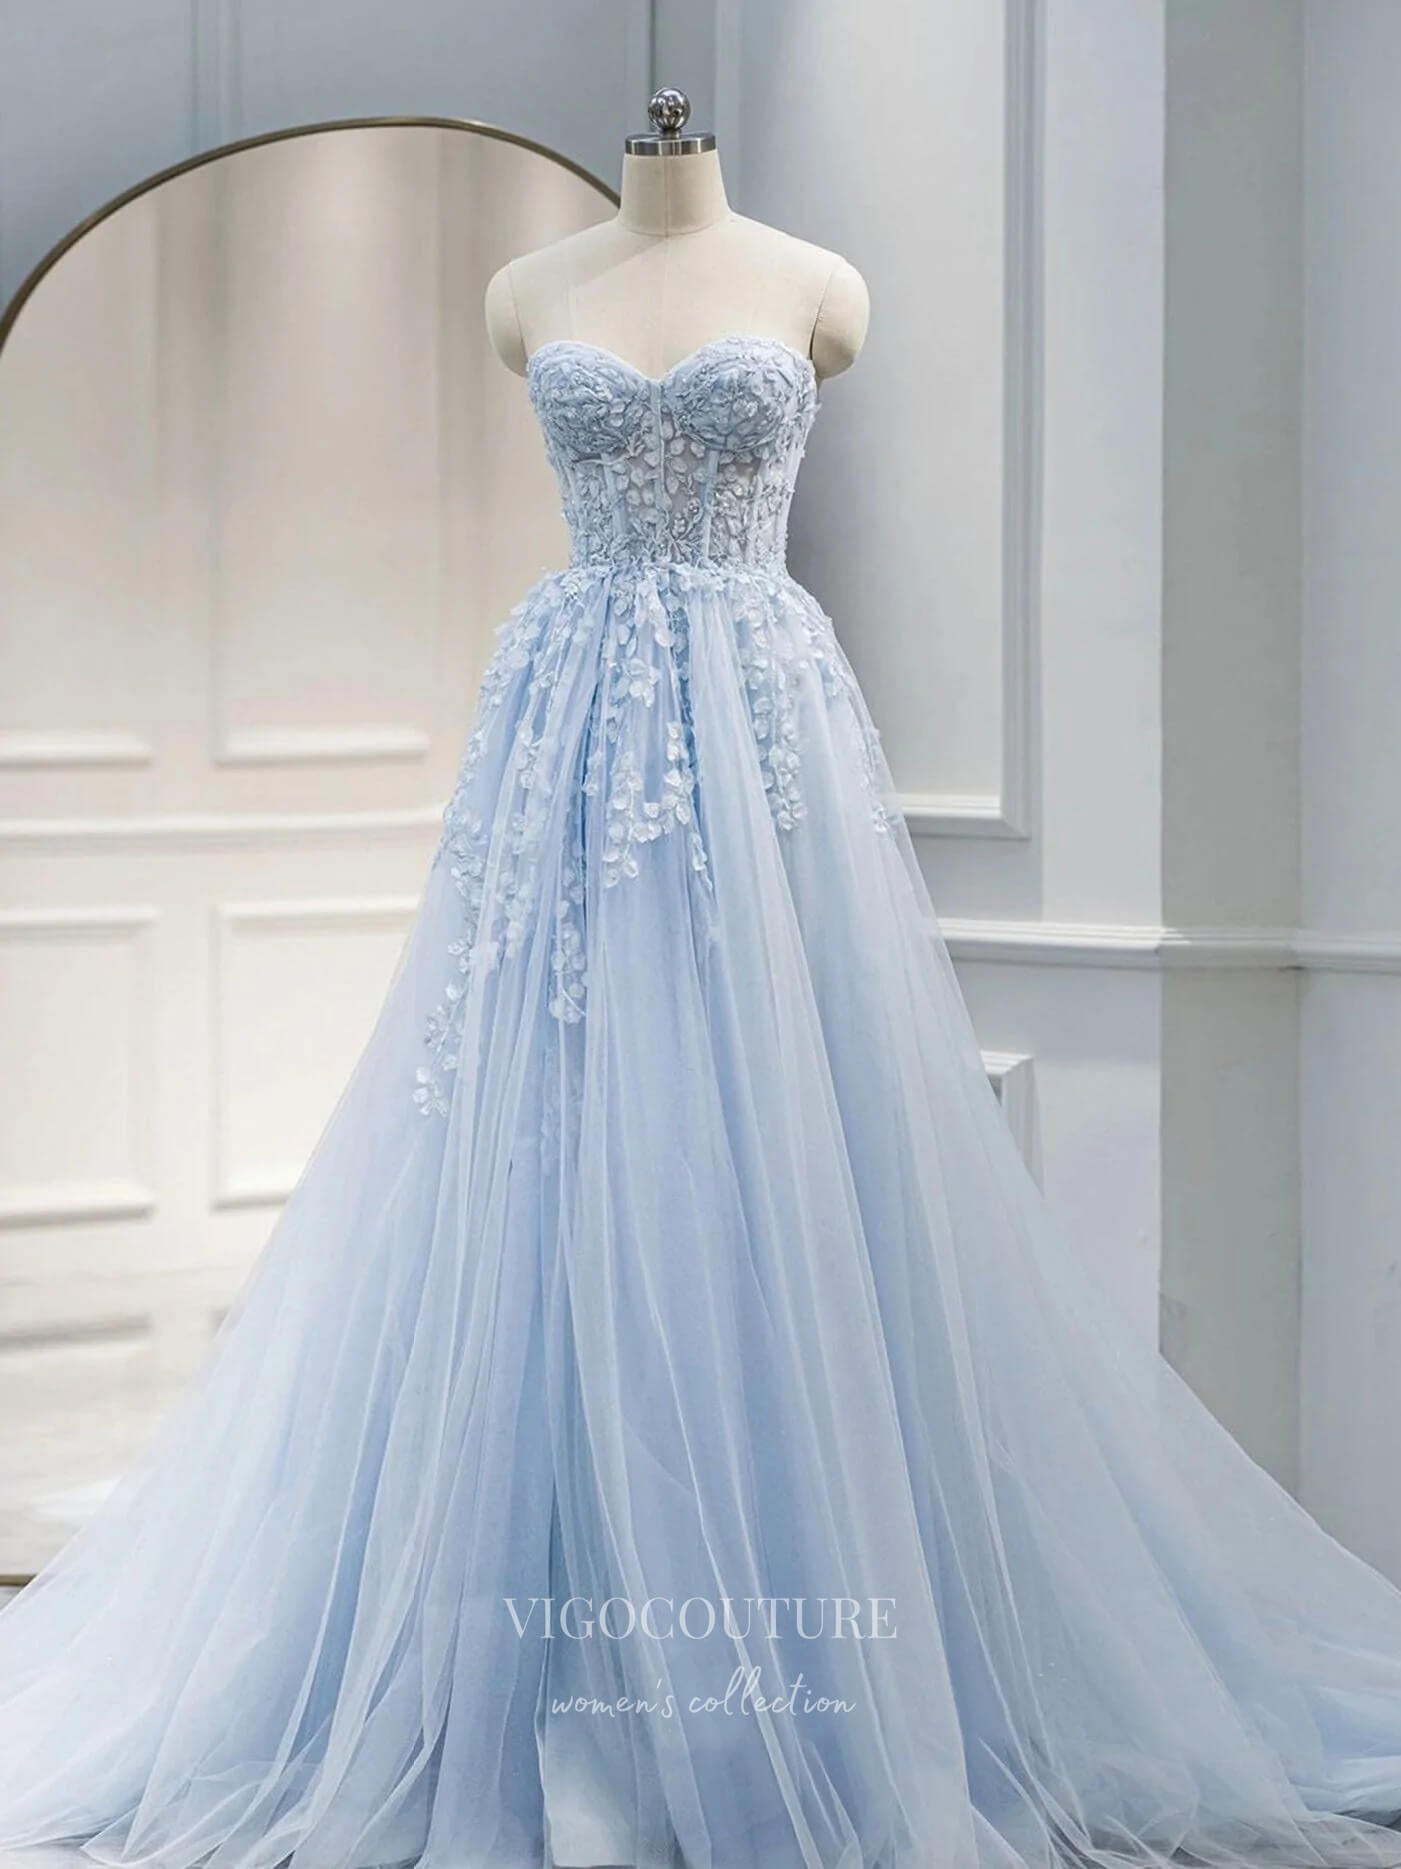 vigocouture-Light Blue Lace Applique Prom Dresses Strapless Evening Dress 21787-Prom Dresses-vigocouture-Light Blue-US2-